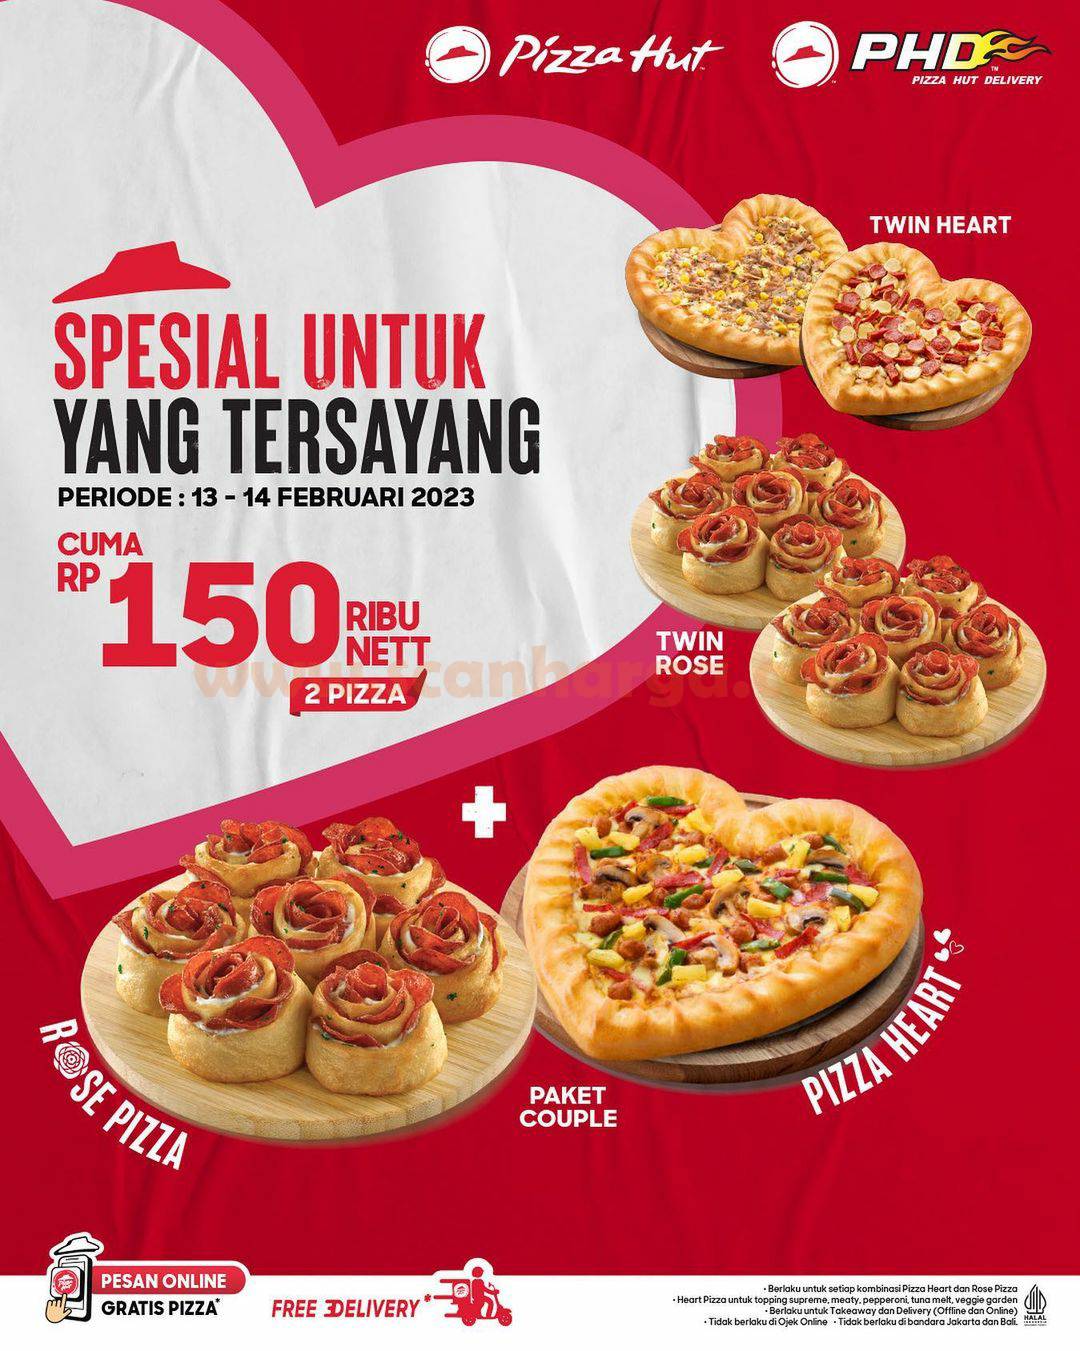 Promo PHD VALENTINE - Harga Spesial 2 Pizza Heart cuma Rp. 150rb